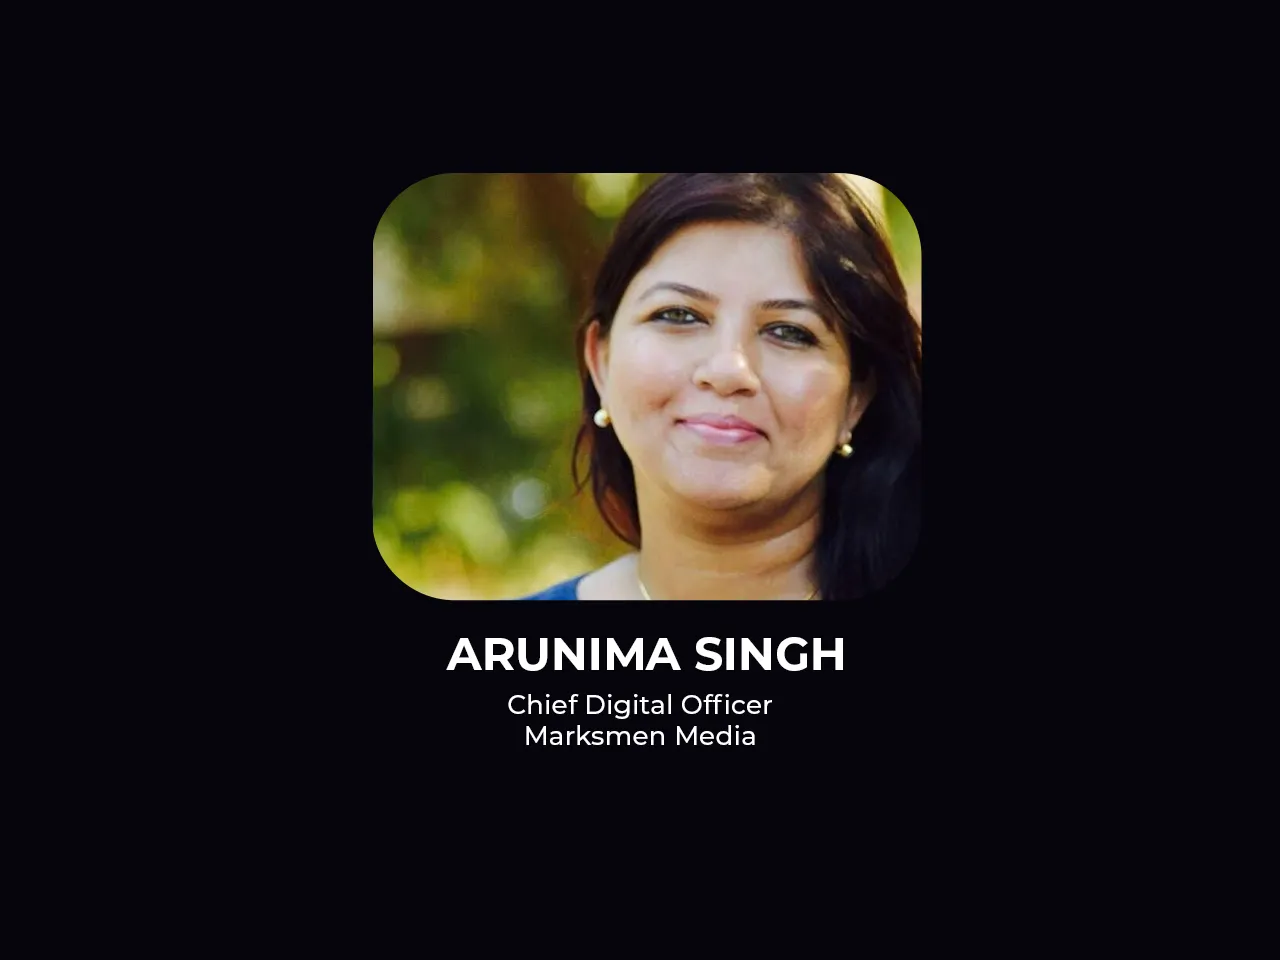 Arunima Singh